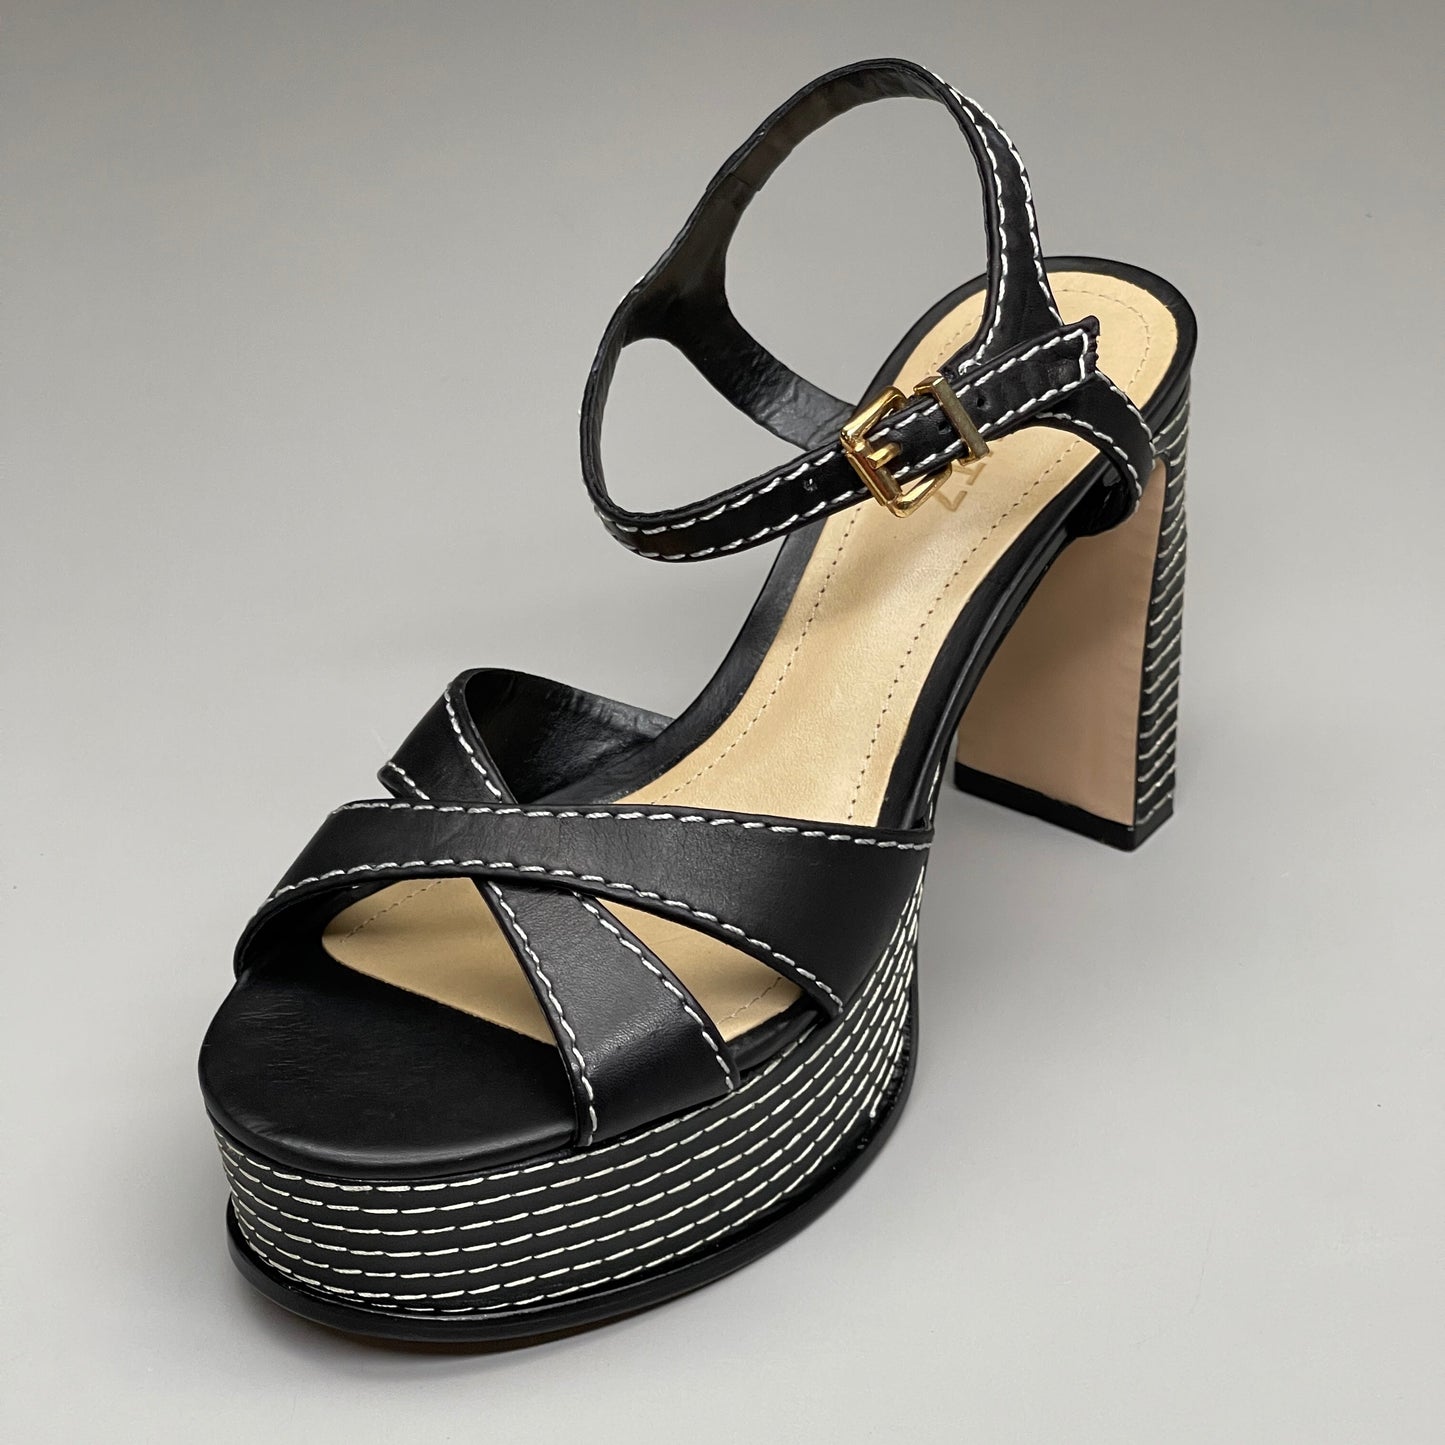 SCHUTZ Keefa Casual Women's Leather Sandal Black Platform 4" Heel Shoes Sz 9B (New)